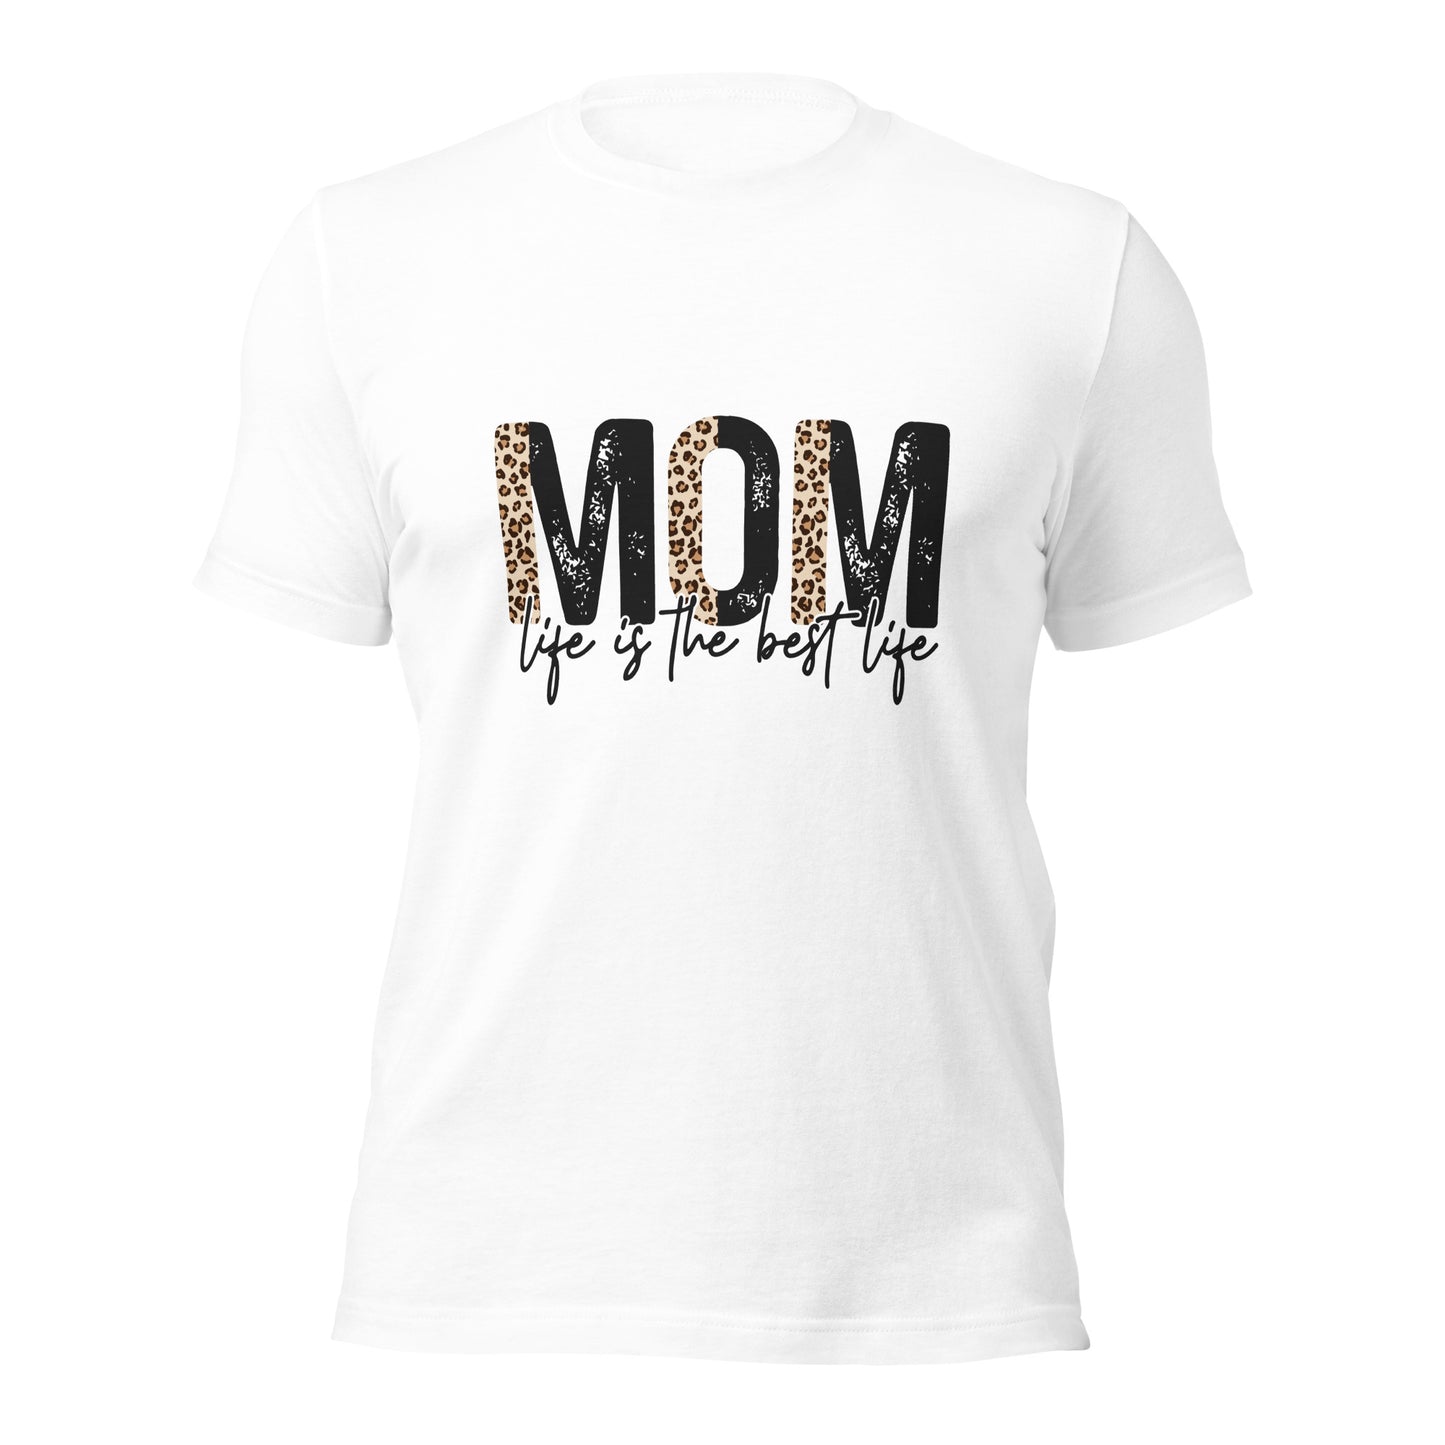 Mom Best Life - Soft Organic Cotton Tshirt for Women